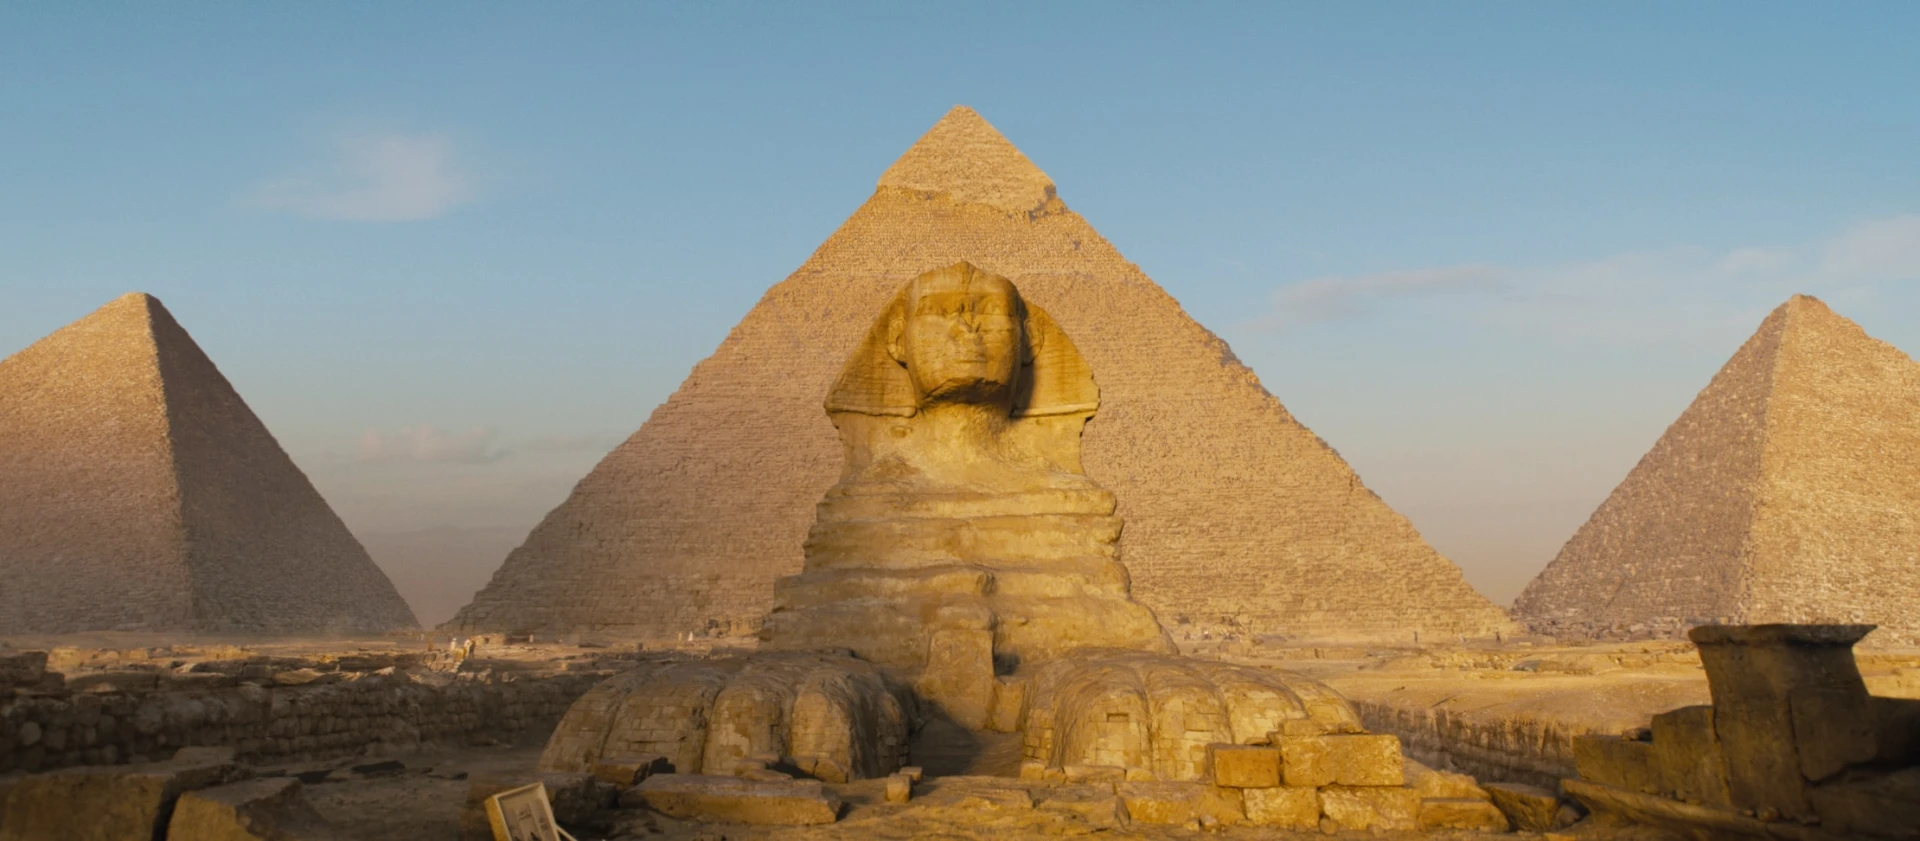 Death on the Nile pyramid and Sphinx Raynault vfx work